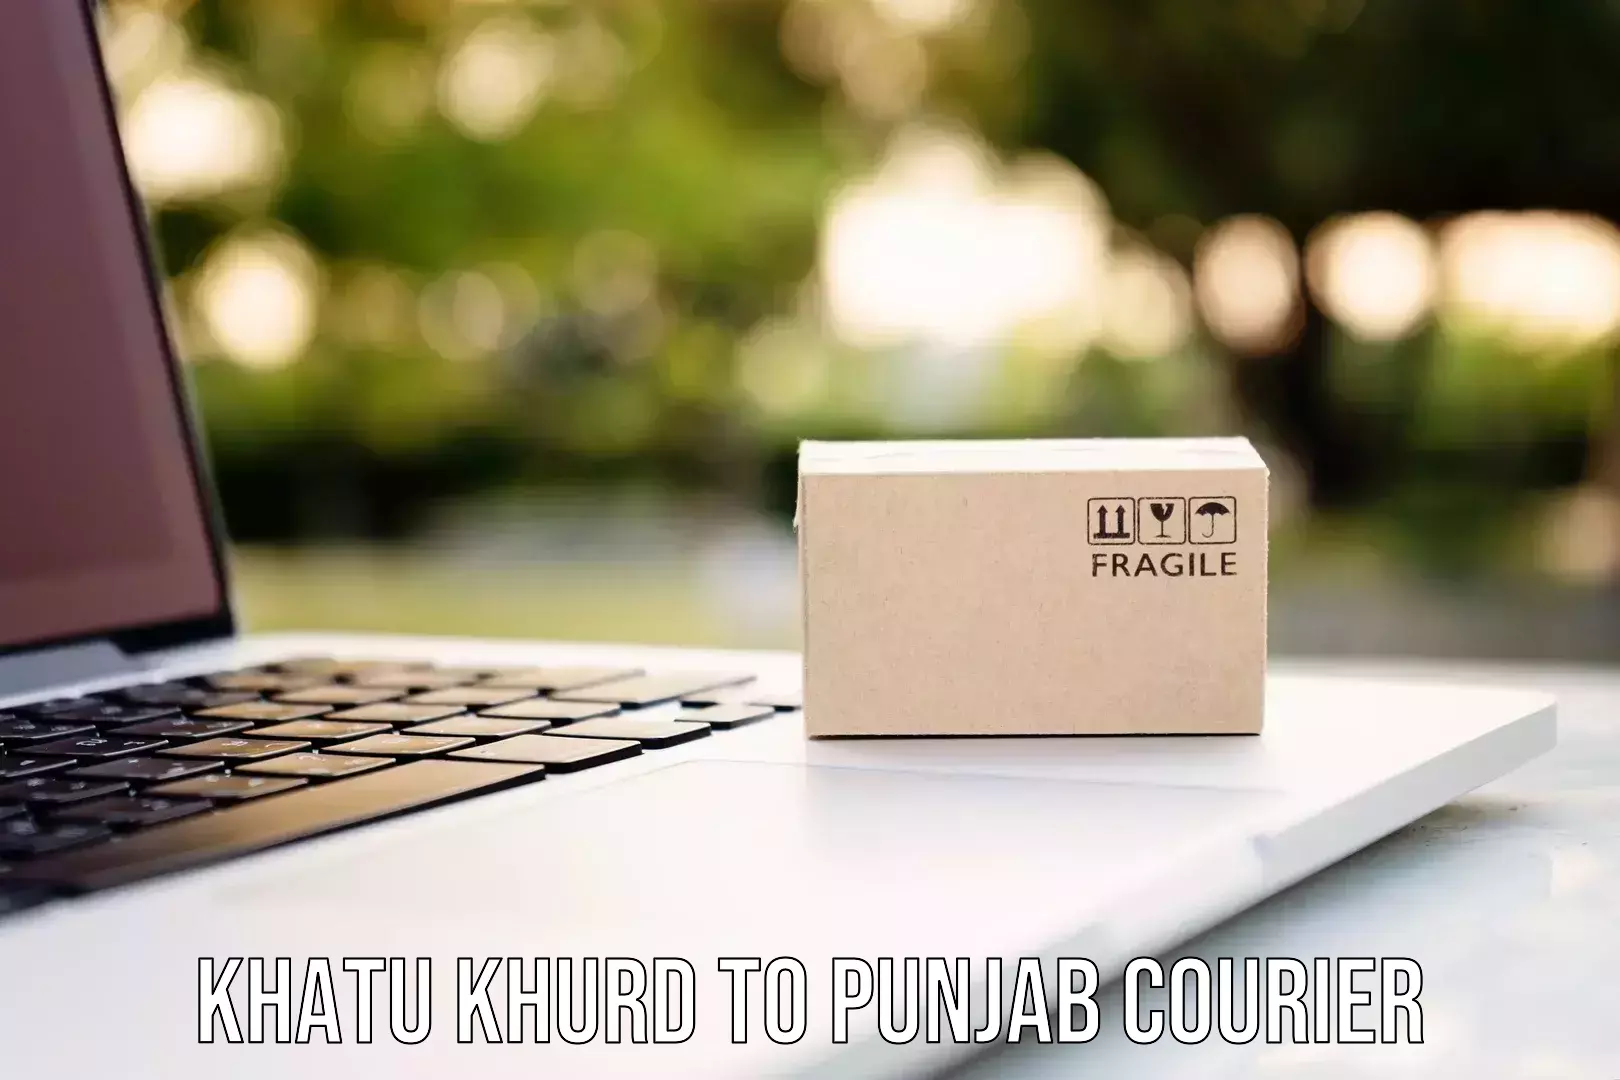 Subscription-based courier Khatu Khurd to Punjab